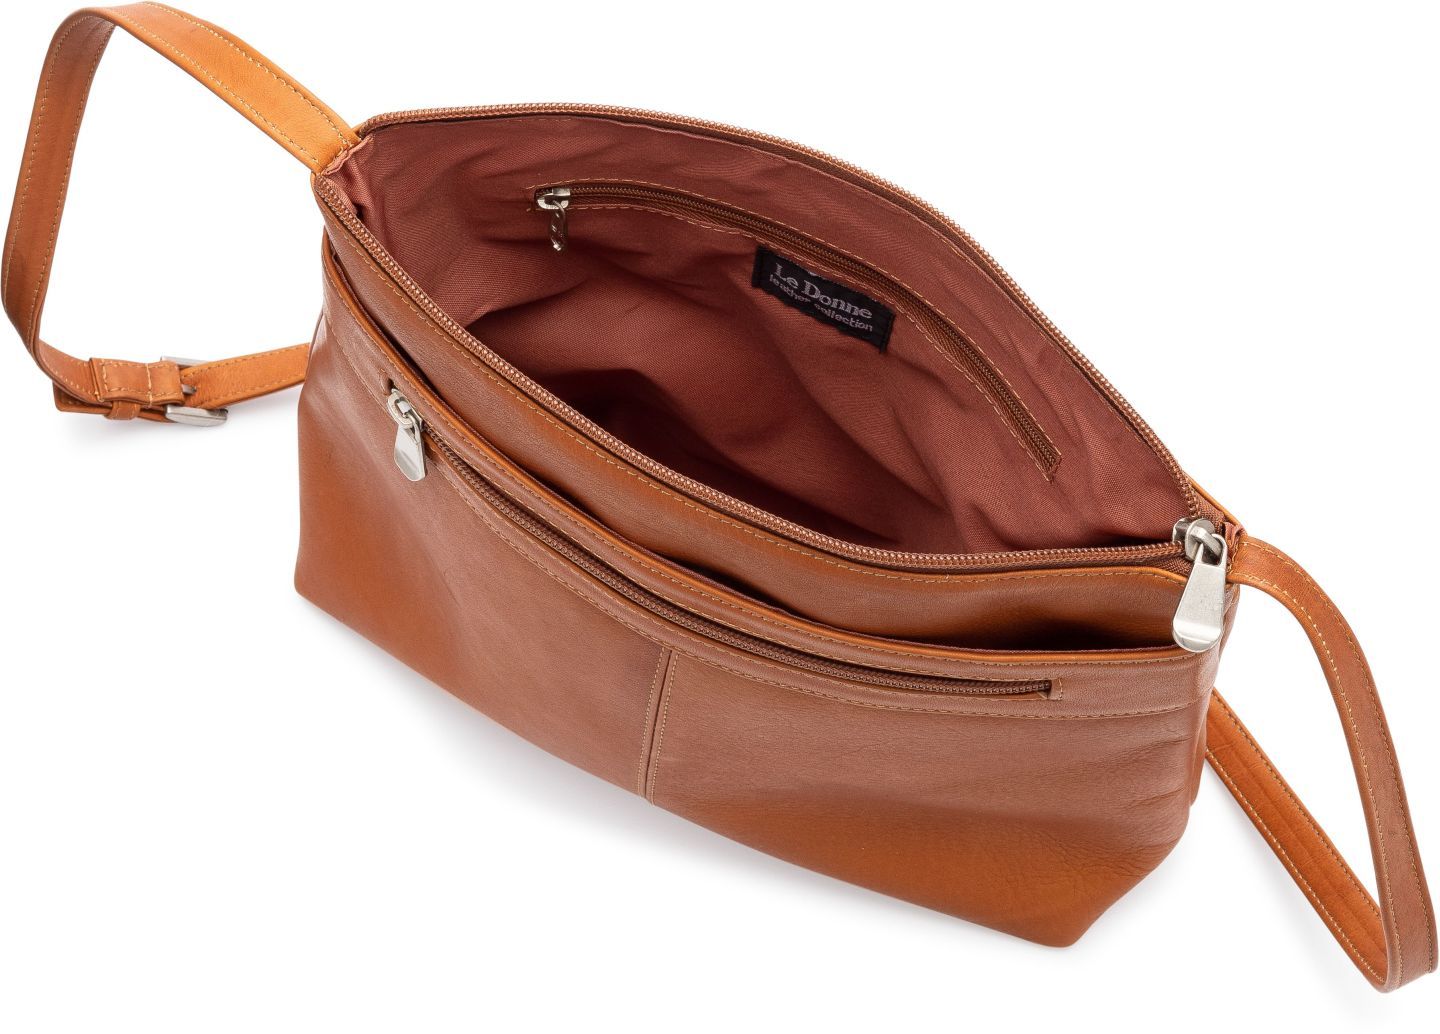 Le Donne Leather Glorienda Multi Bag LD-9966 - image 2 of 4